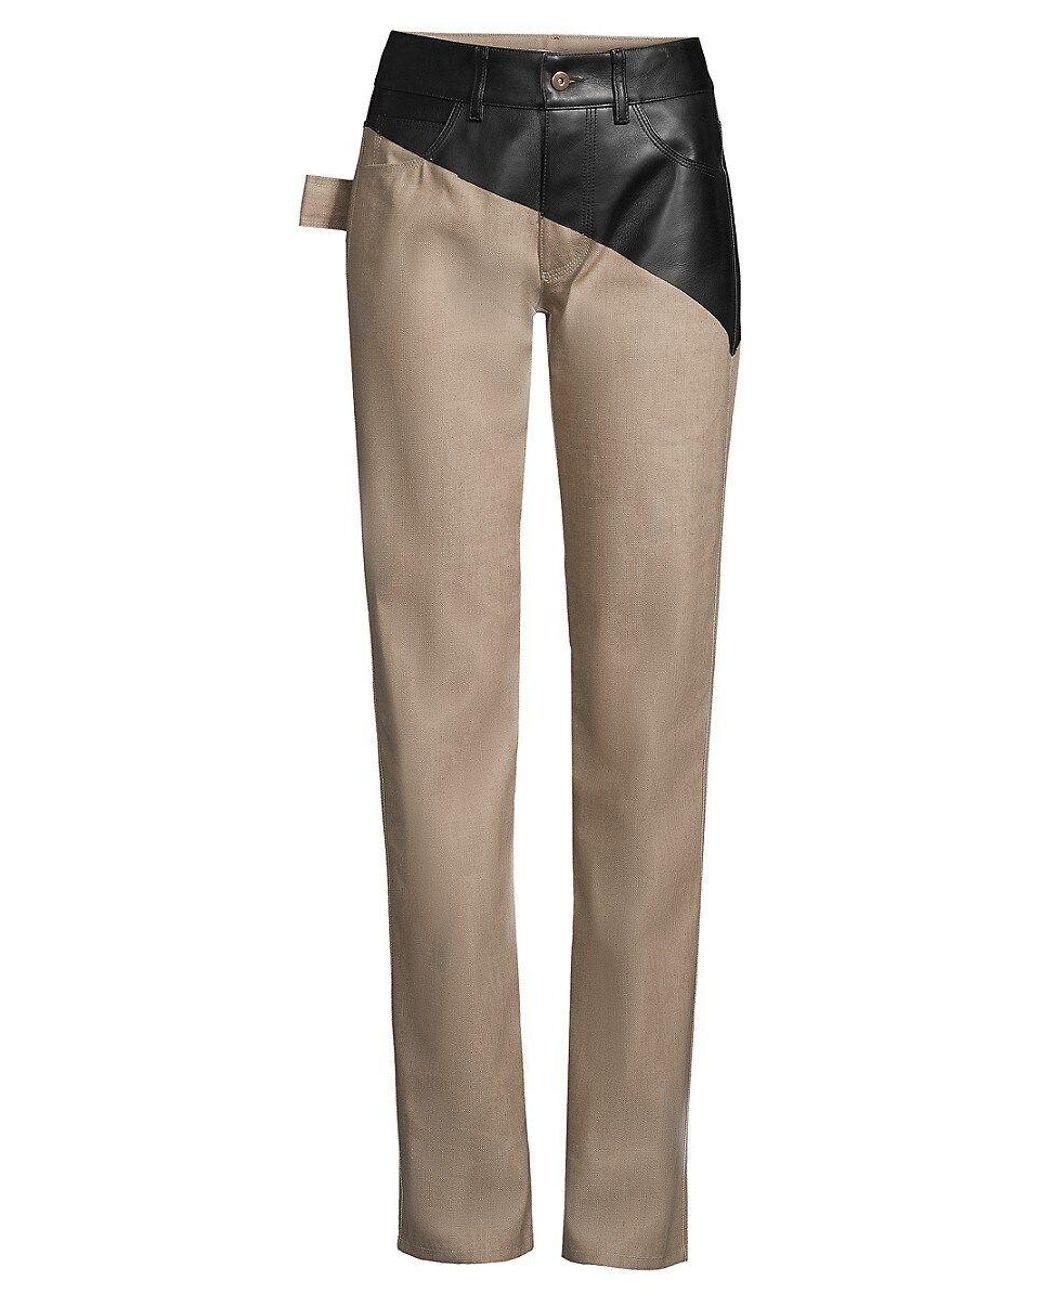 Bottega Veneta Shiny Leather Pants with Waistband and Ankle Velcro Detail  women - Glamood Outlet